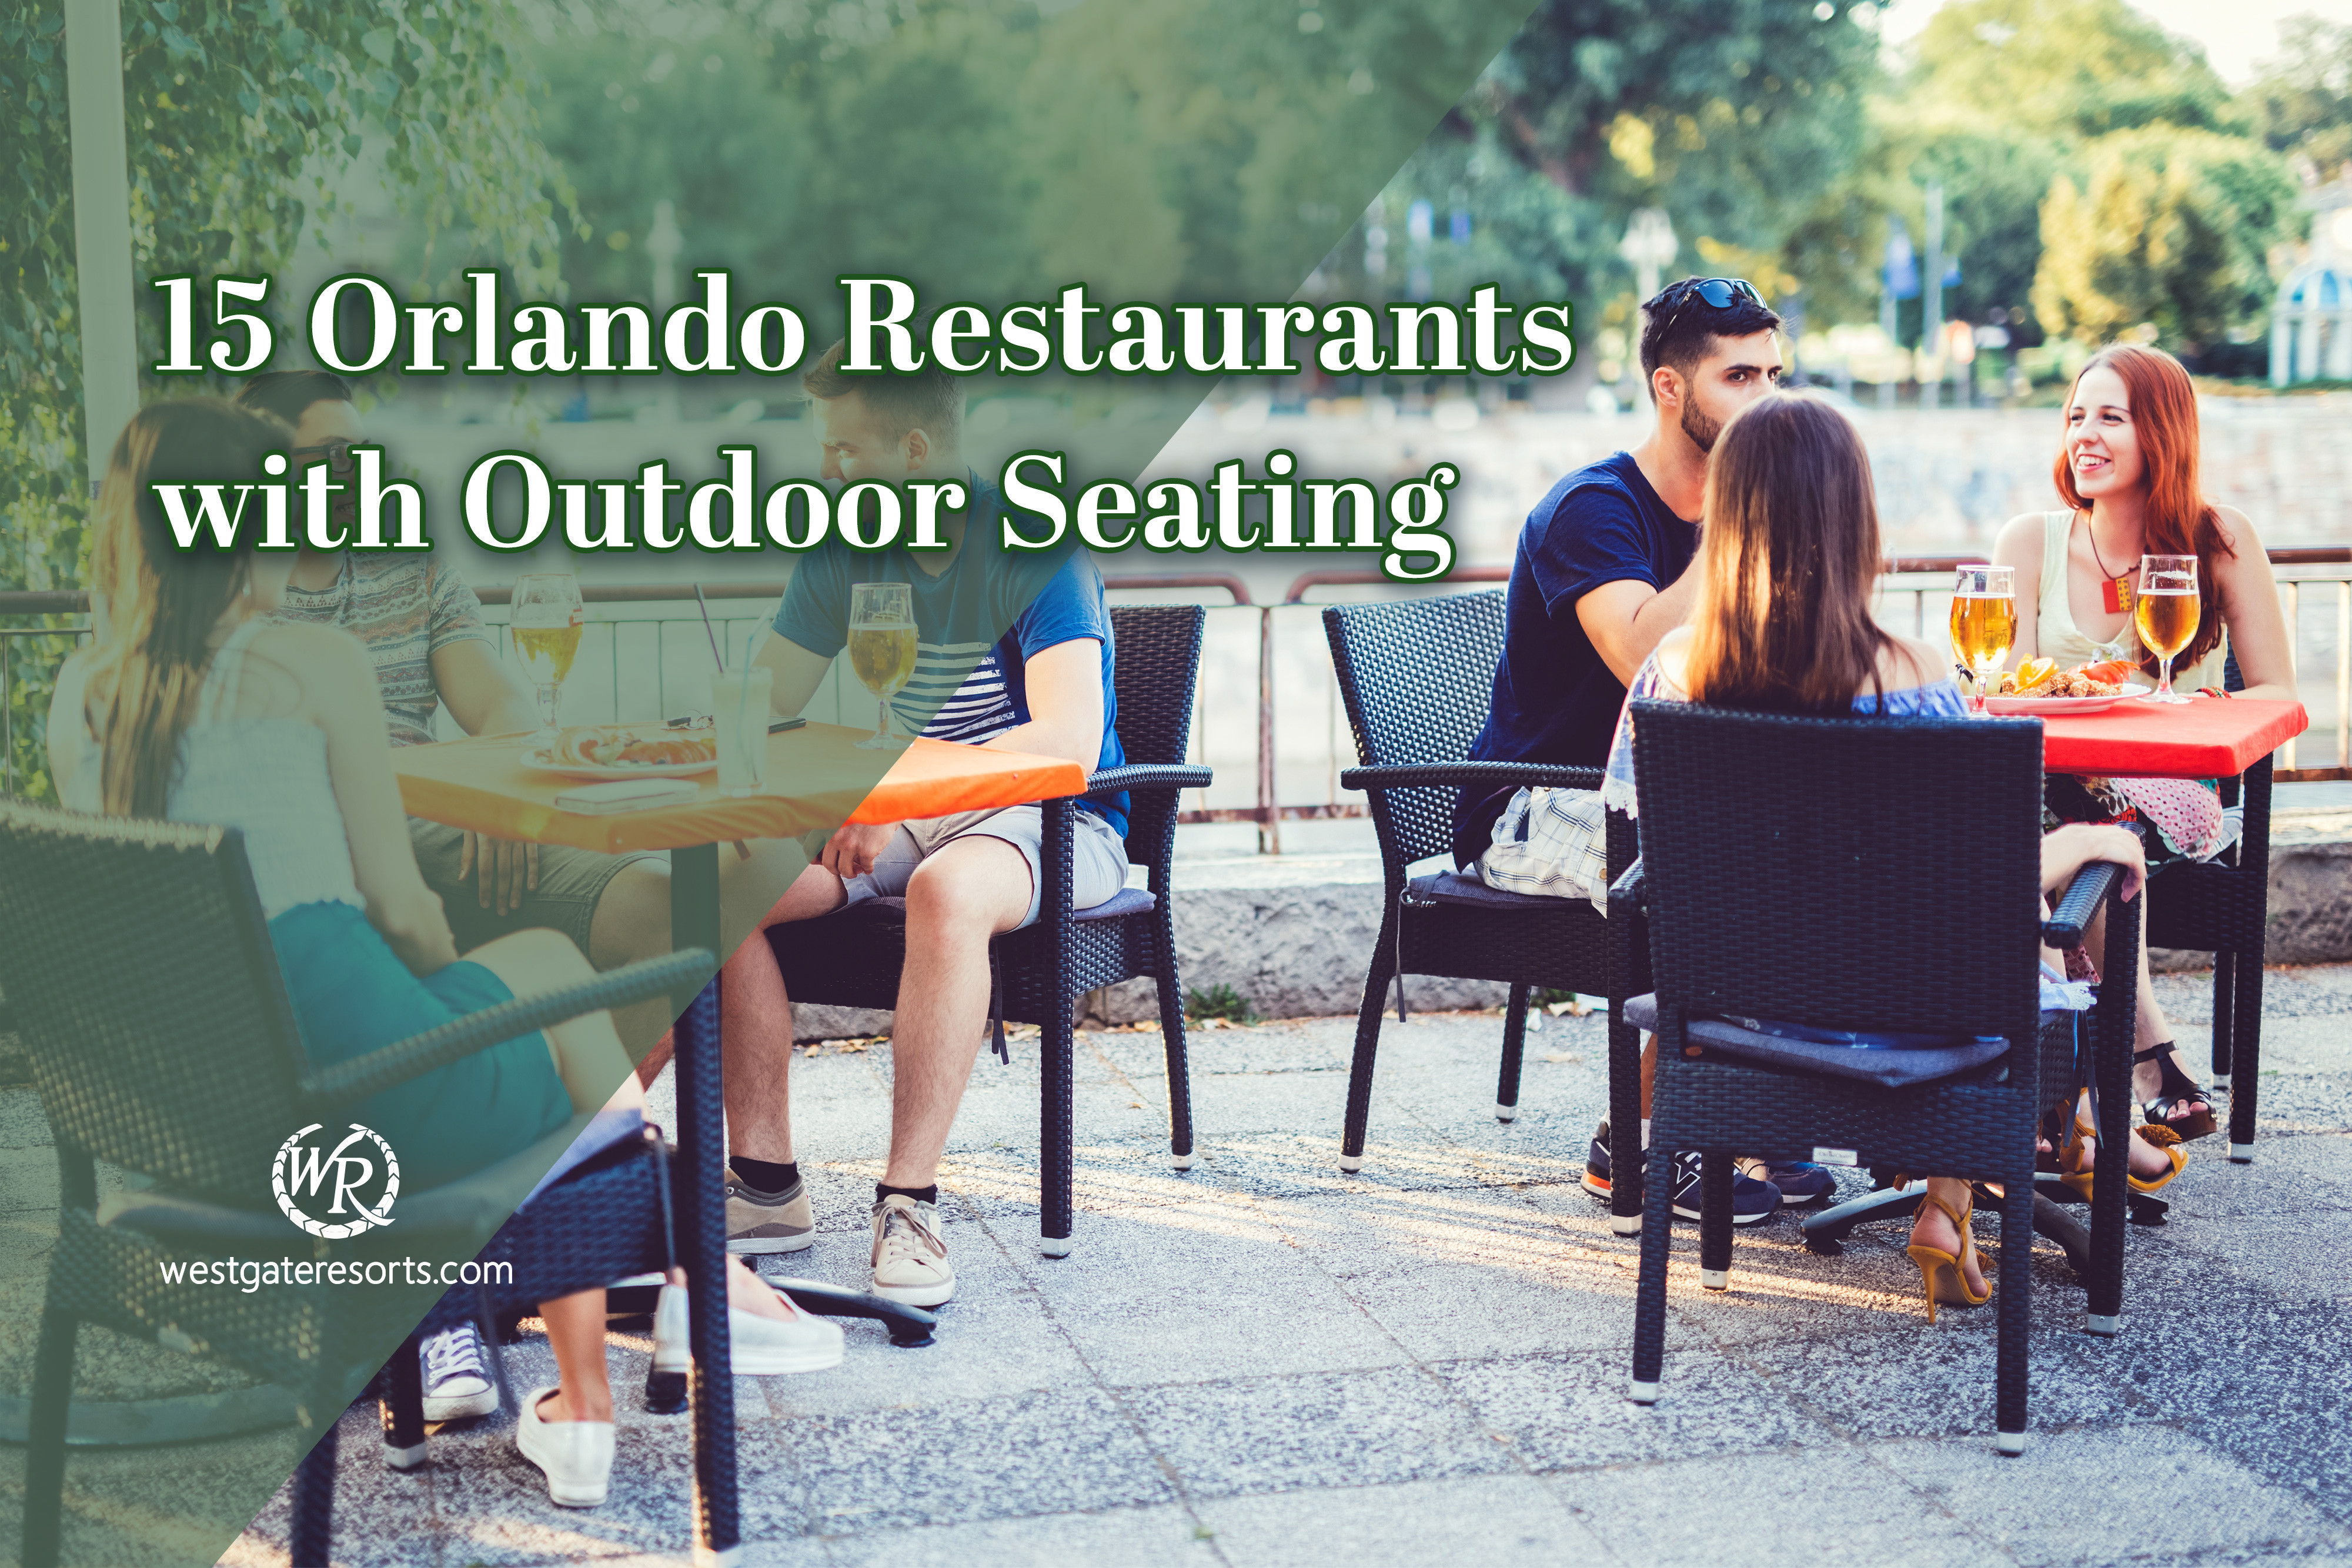 15 restaurantes de Orlando con mesas al aire libre